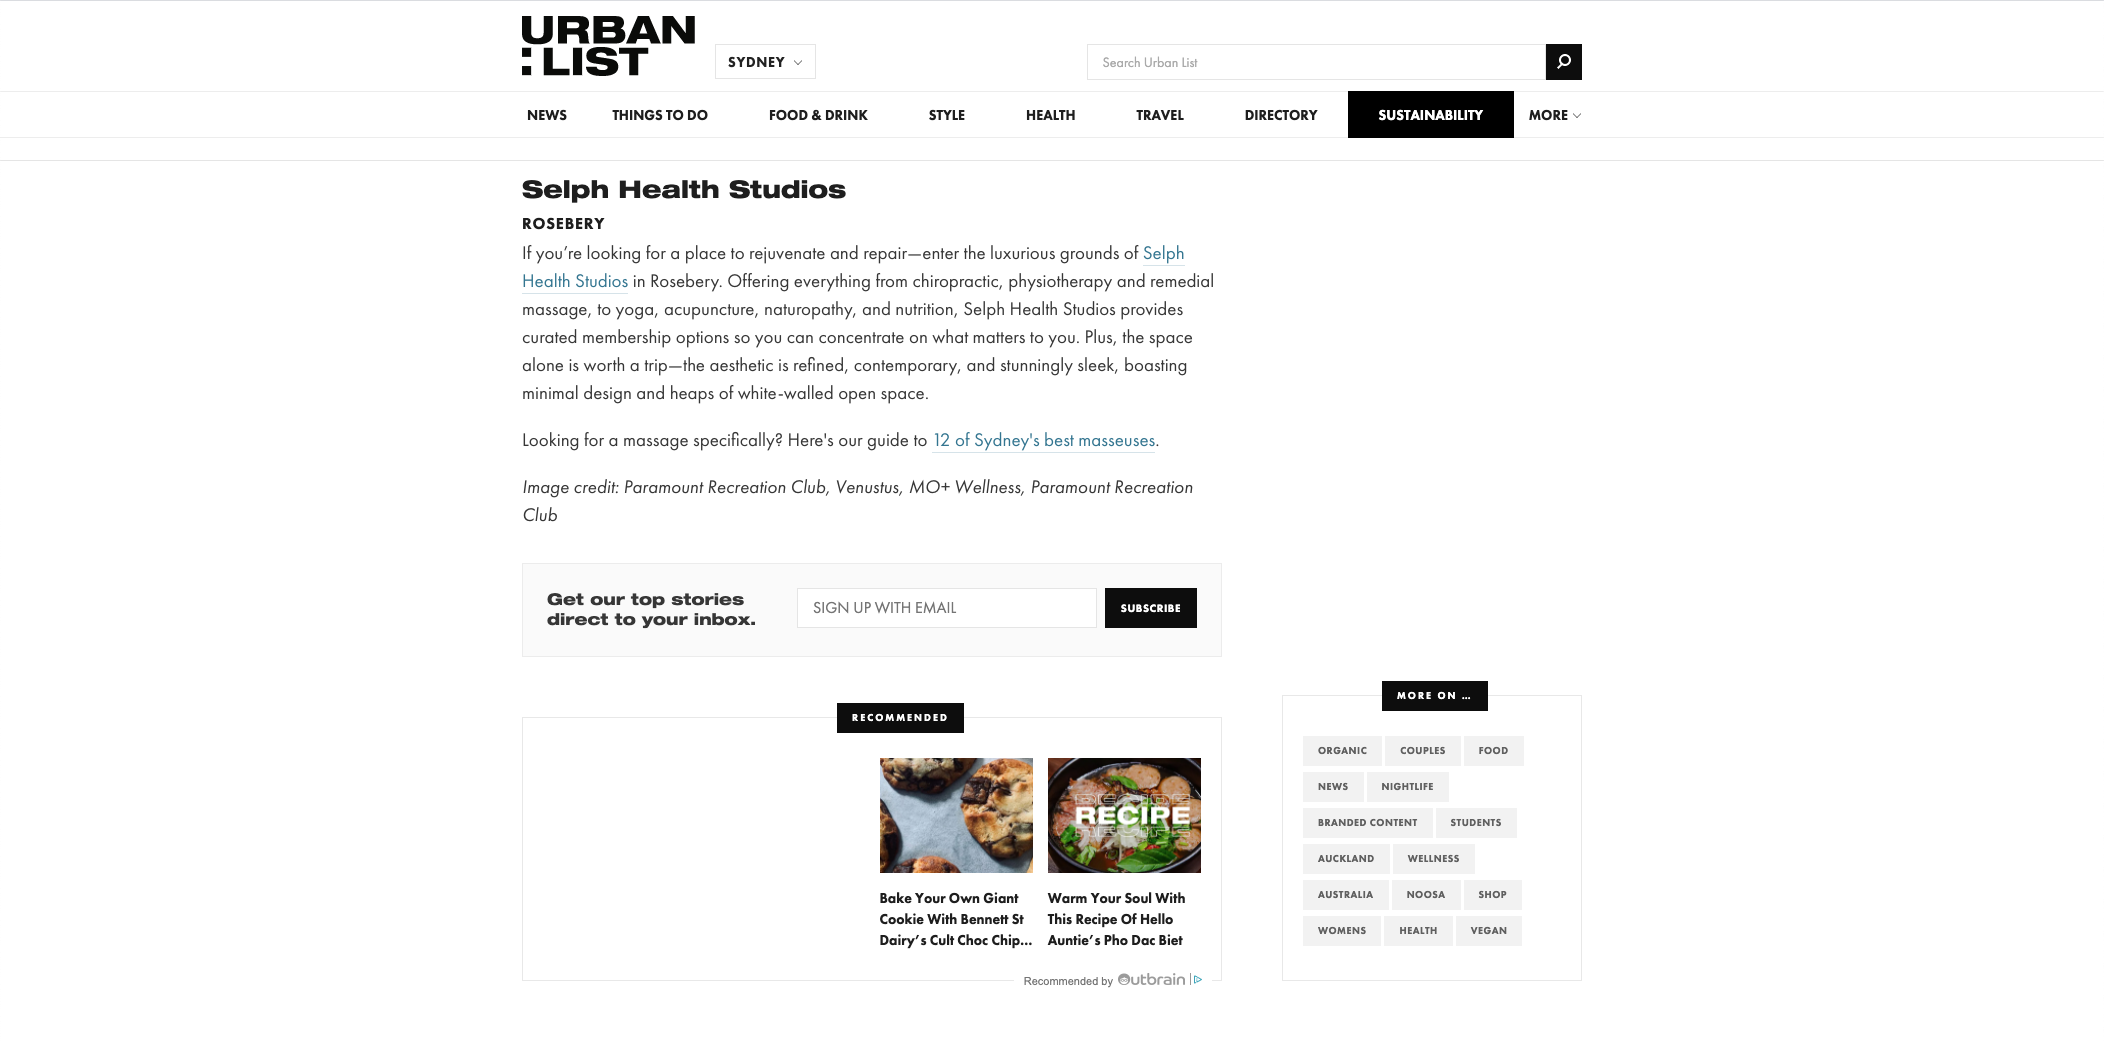 Urban List - selph health studios